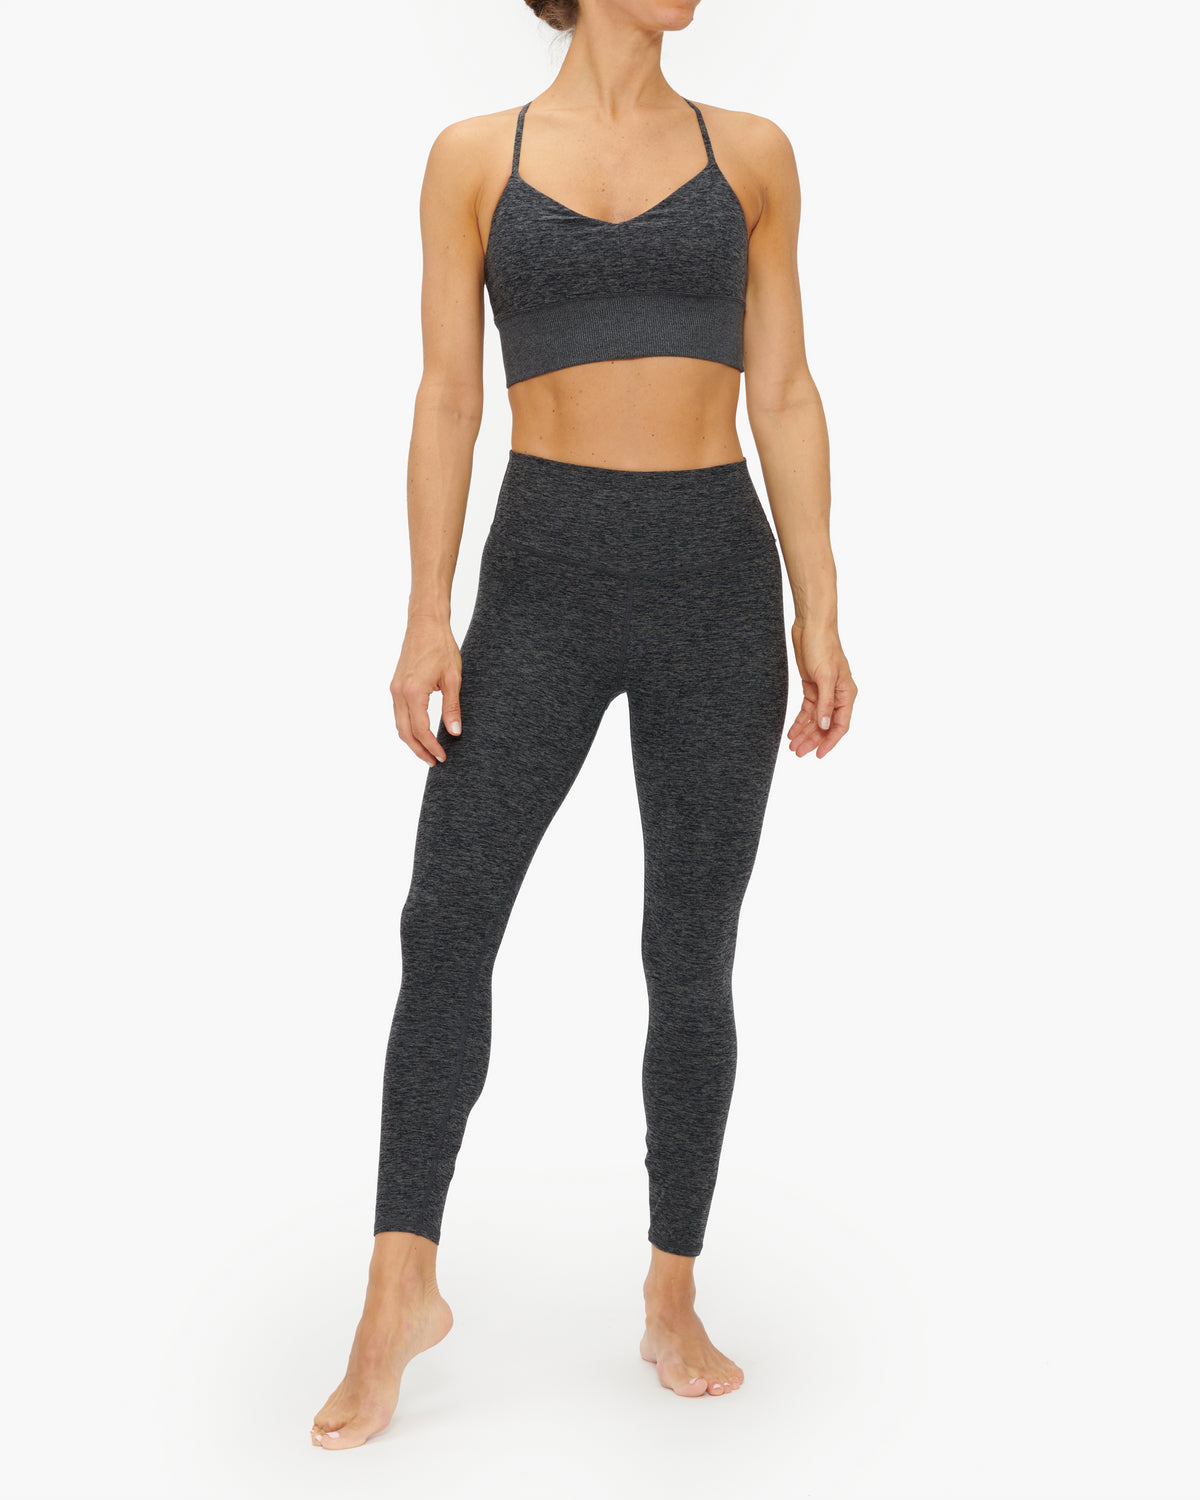 Alosoft Lavish Bra - Black Plum Heather - Pre Order  Alo yoga, Colorful  fashion, Medium impact sports bra